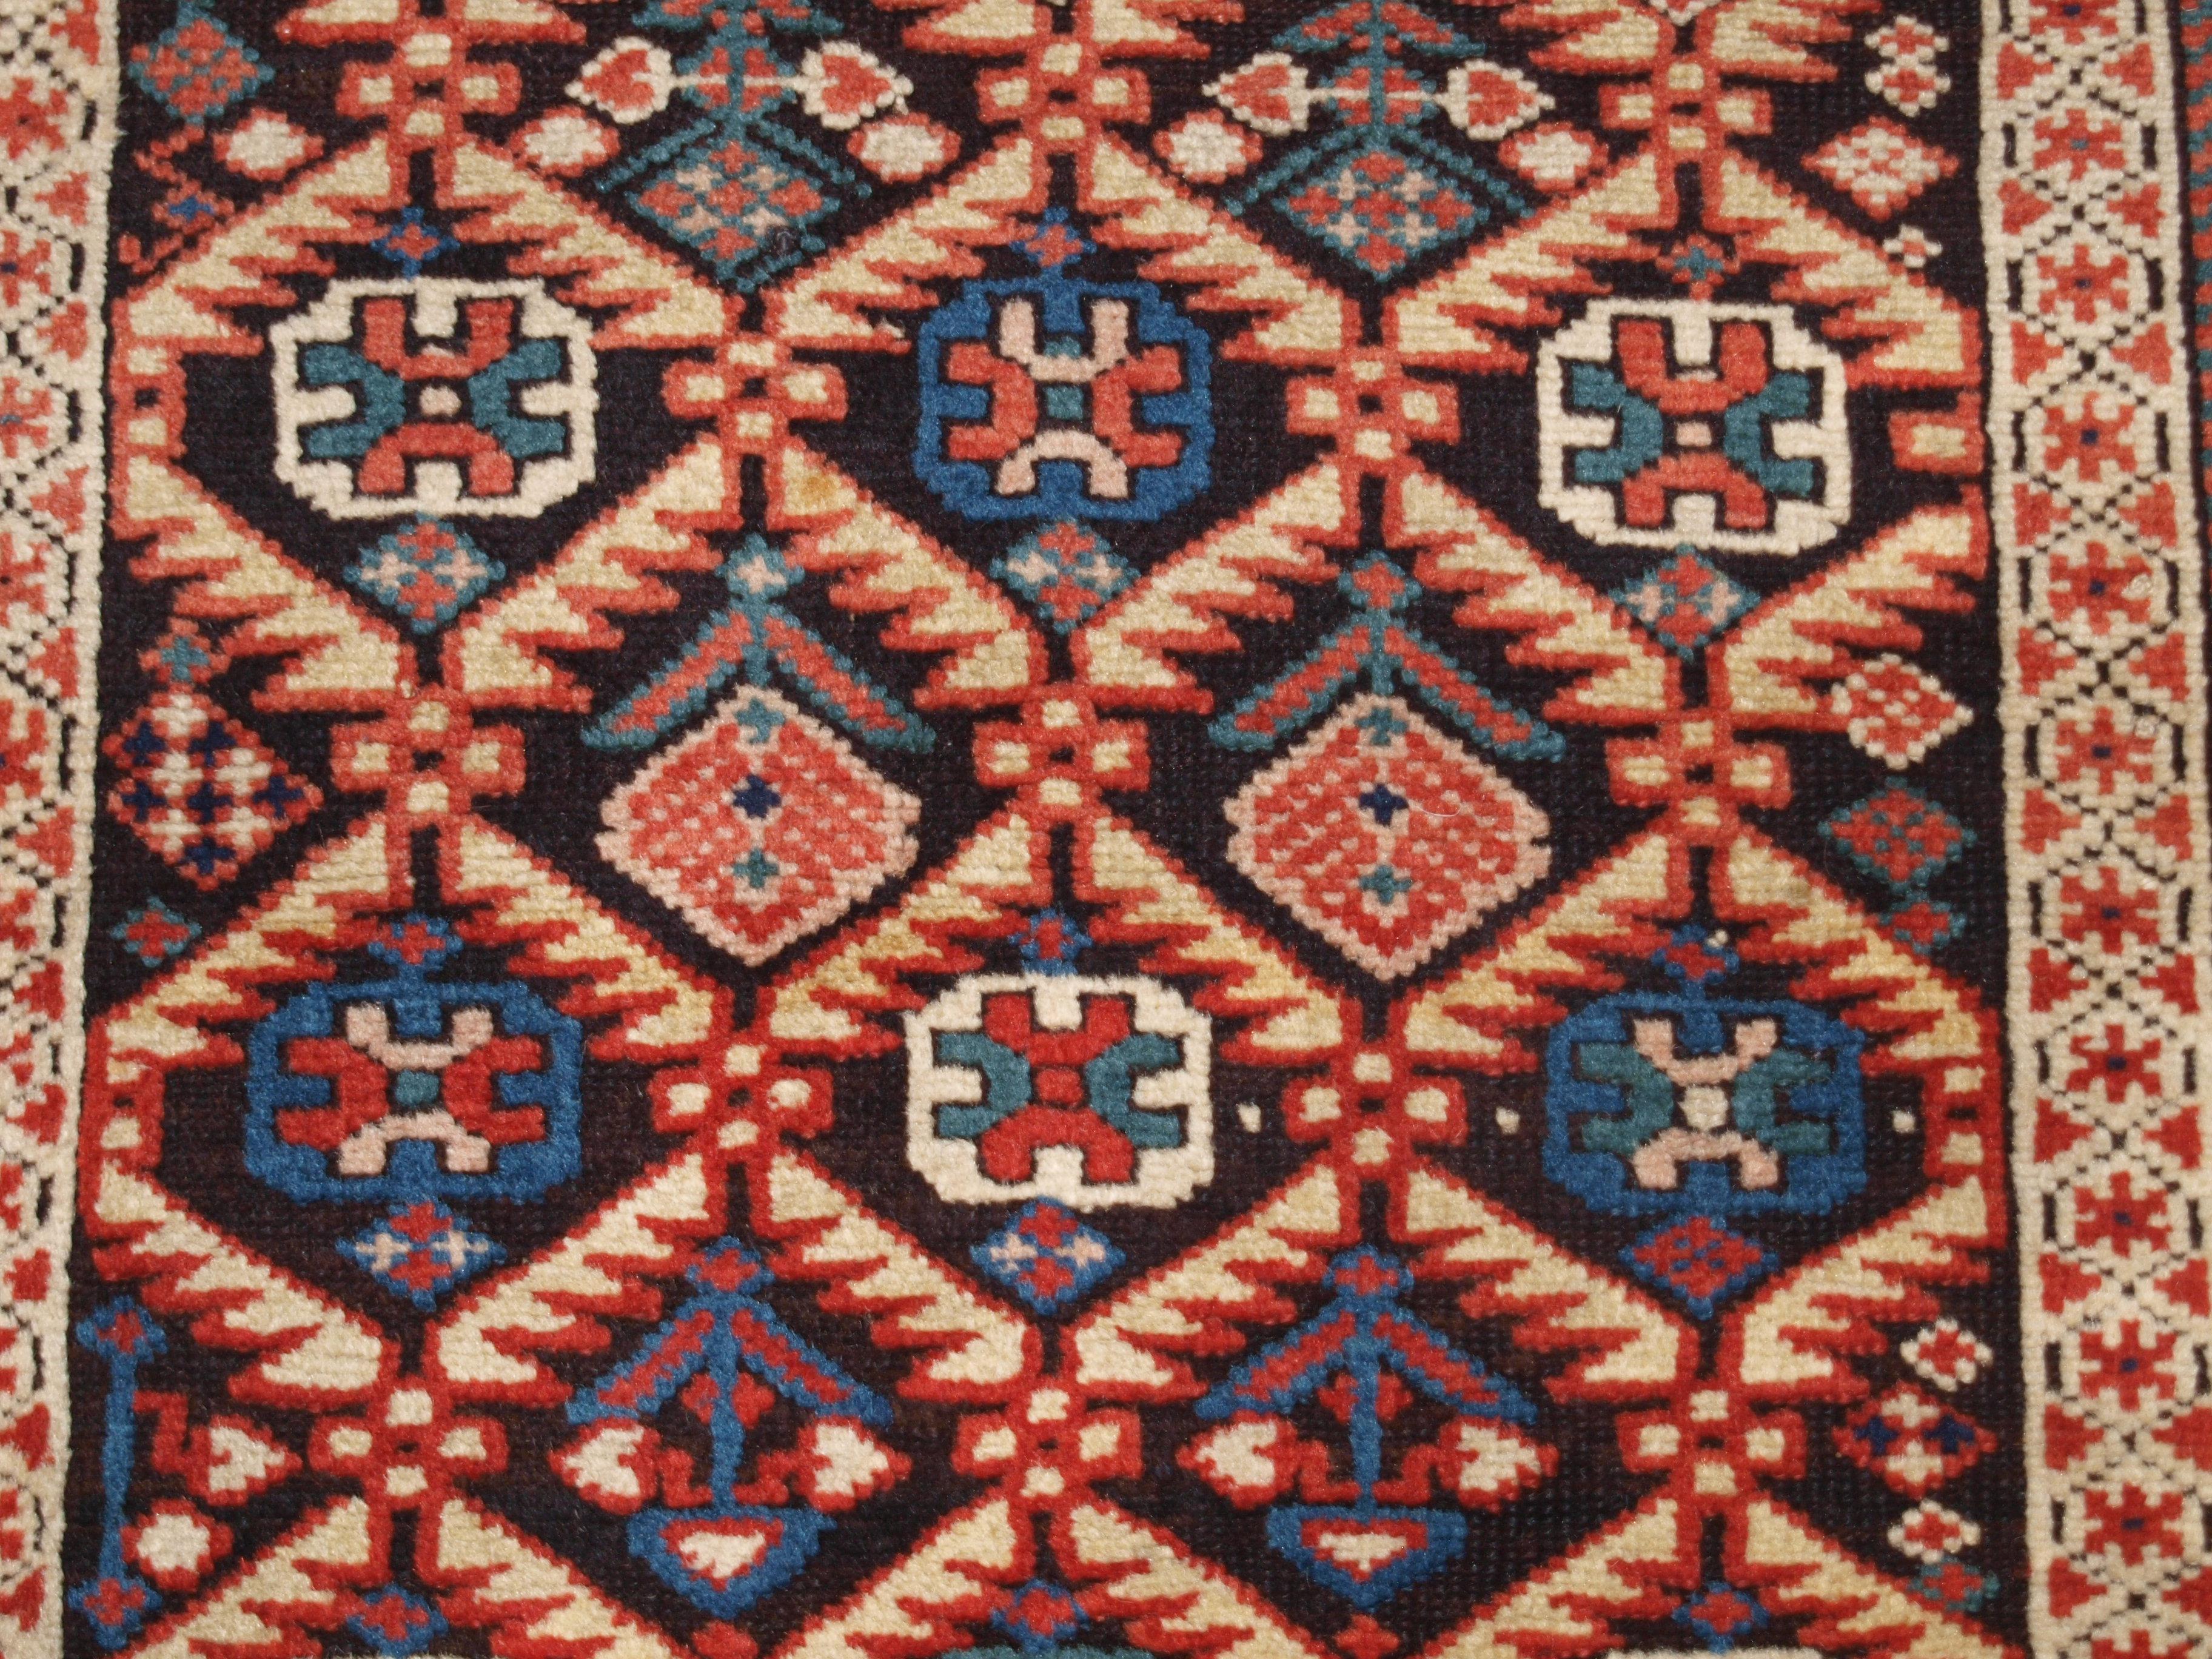 Antique Caucasian Dagestan Rug with Lattice Design on Dark Charcoal Ground 3